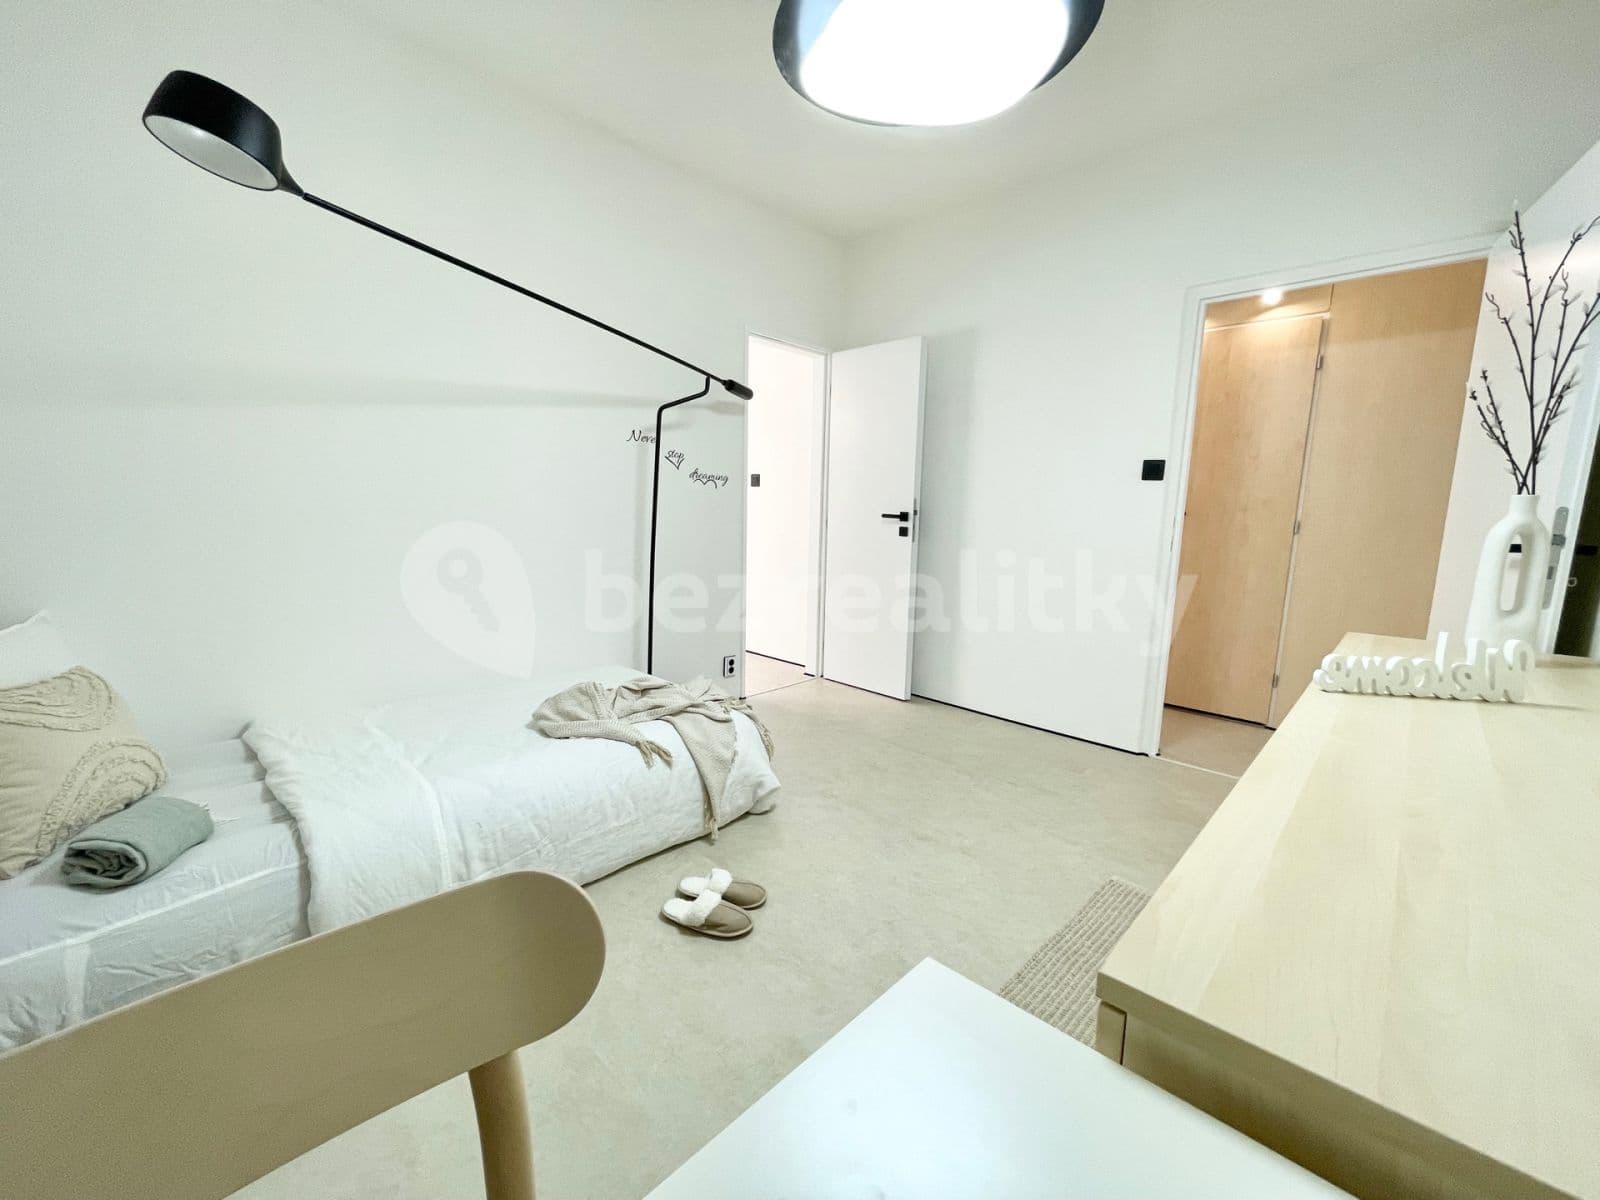 3 bedroom with open-plan kitchen flat for sale, 64 m², Sousedská, Plzeň, Plzeňský Region